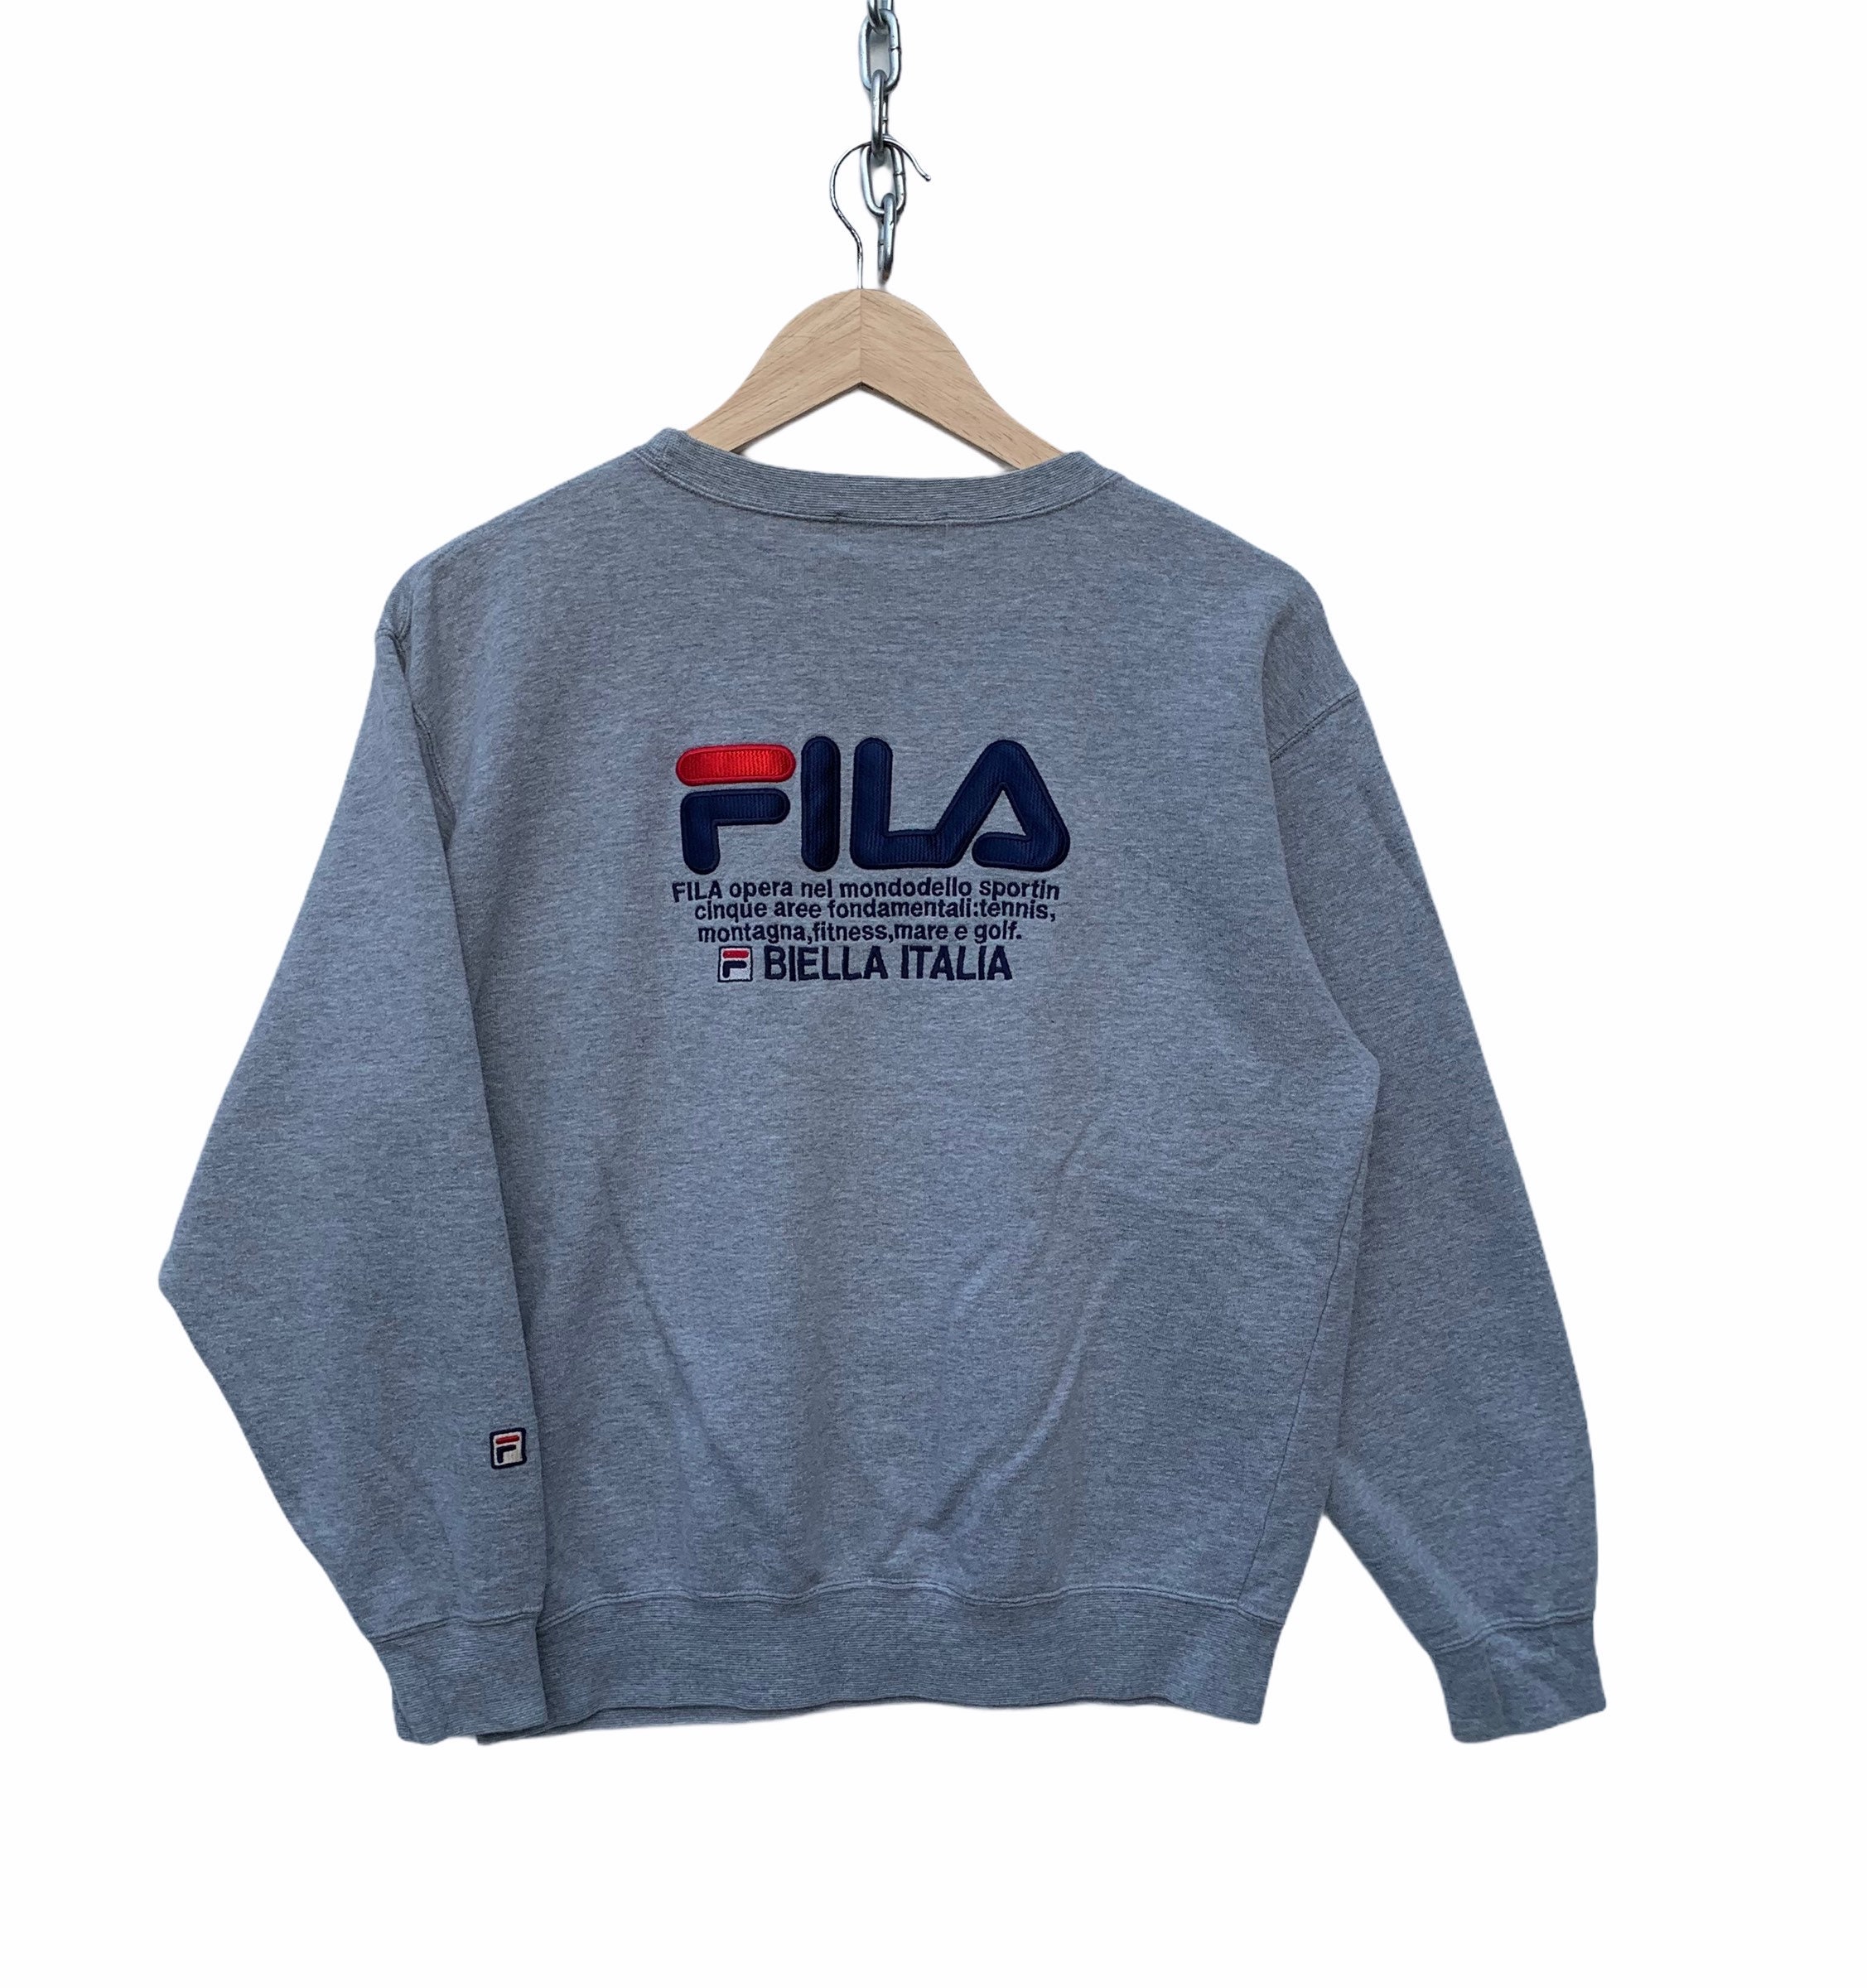 Fila Sweatshirt Vintage Fila Sweatshirt Spellout Fila Big Logo | Etsy